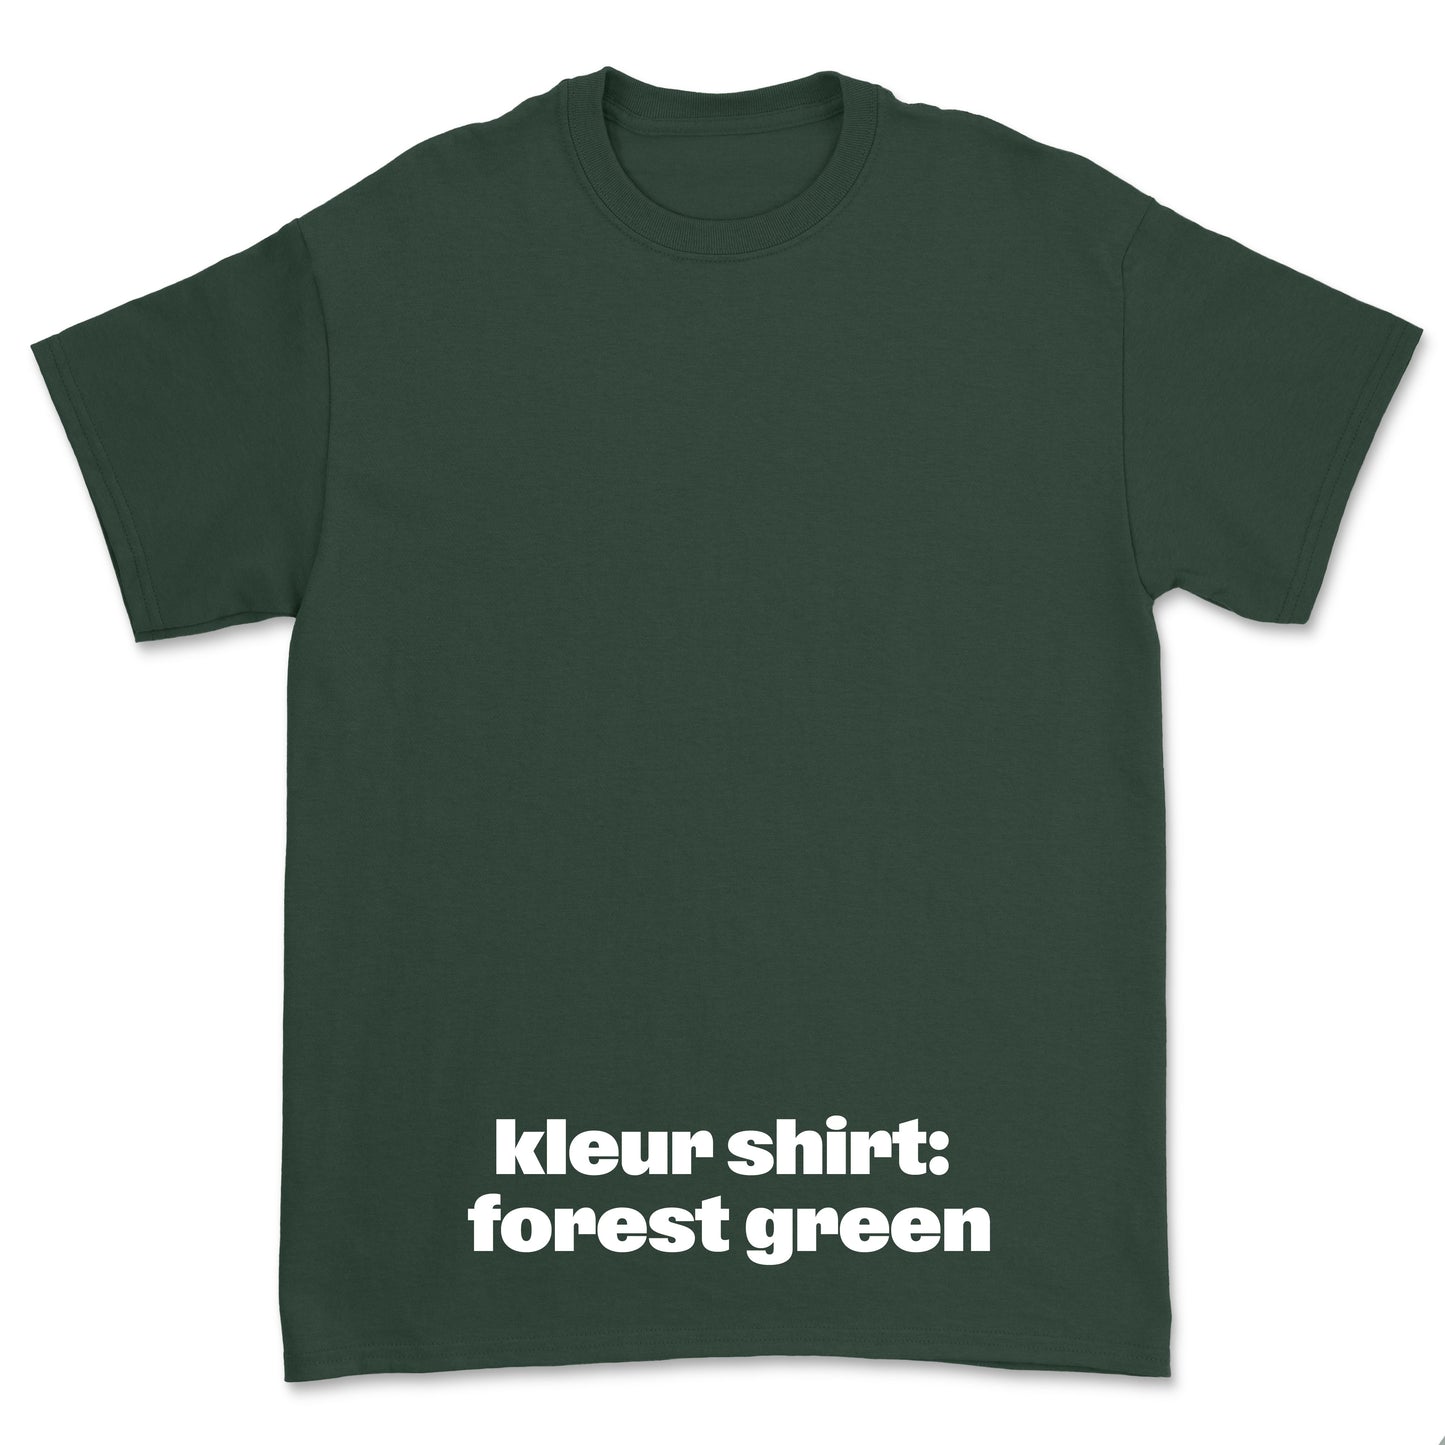 T-shirt 'Left of the Dial' • Klein zwart logo midden